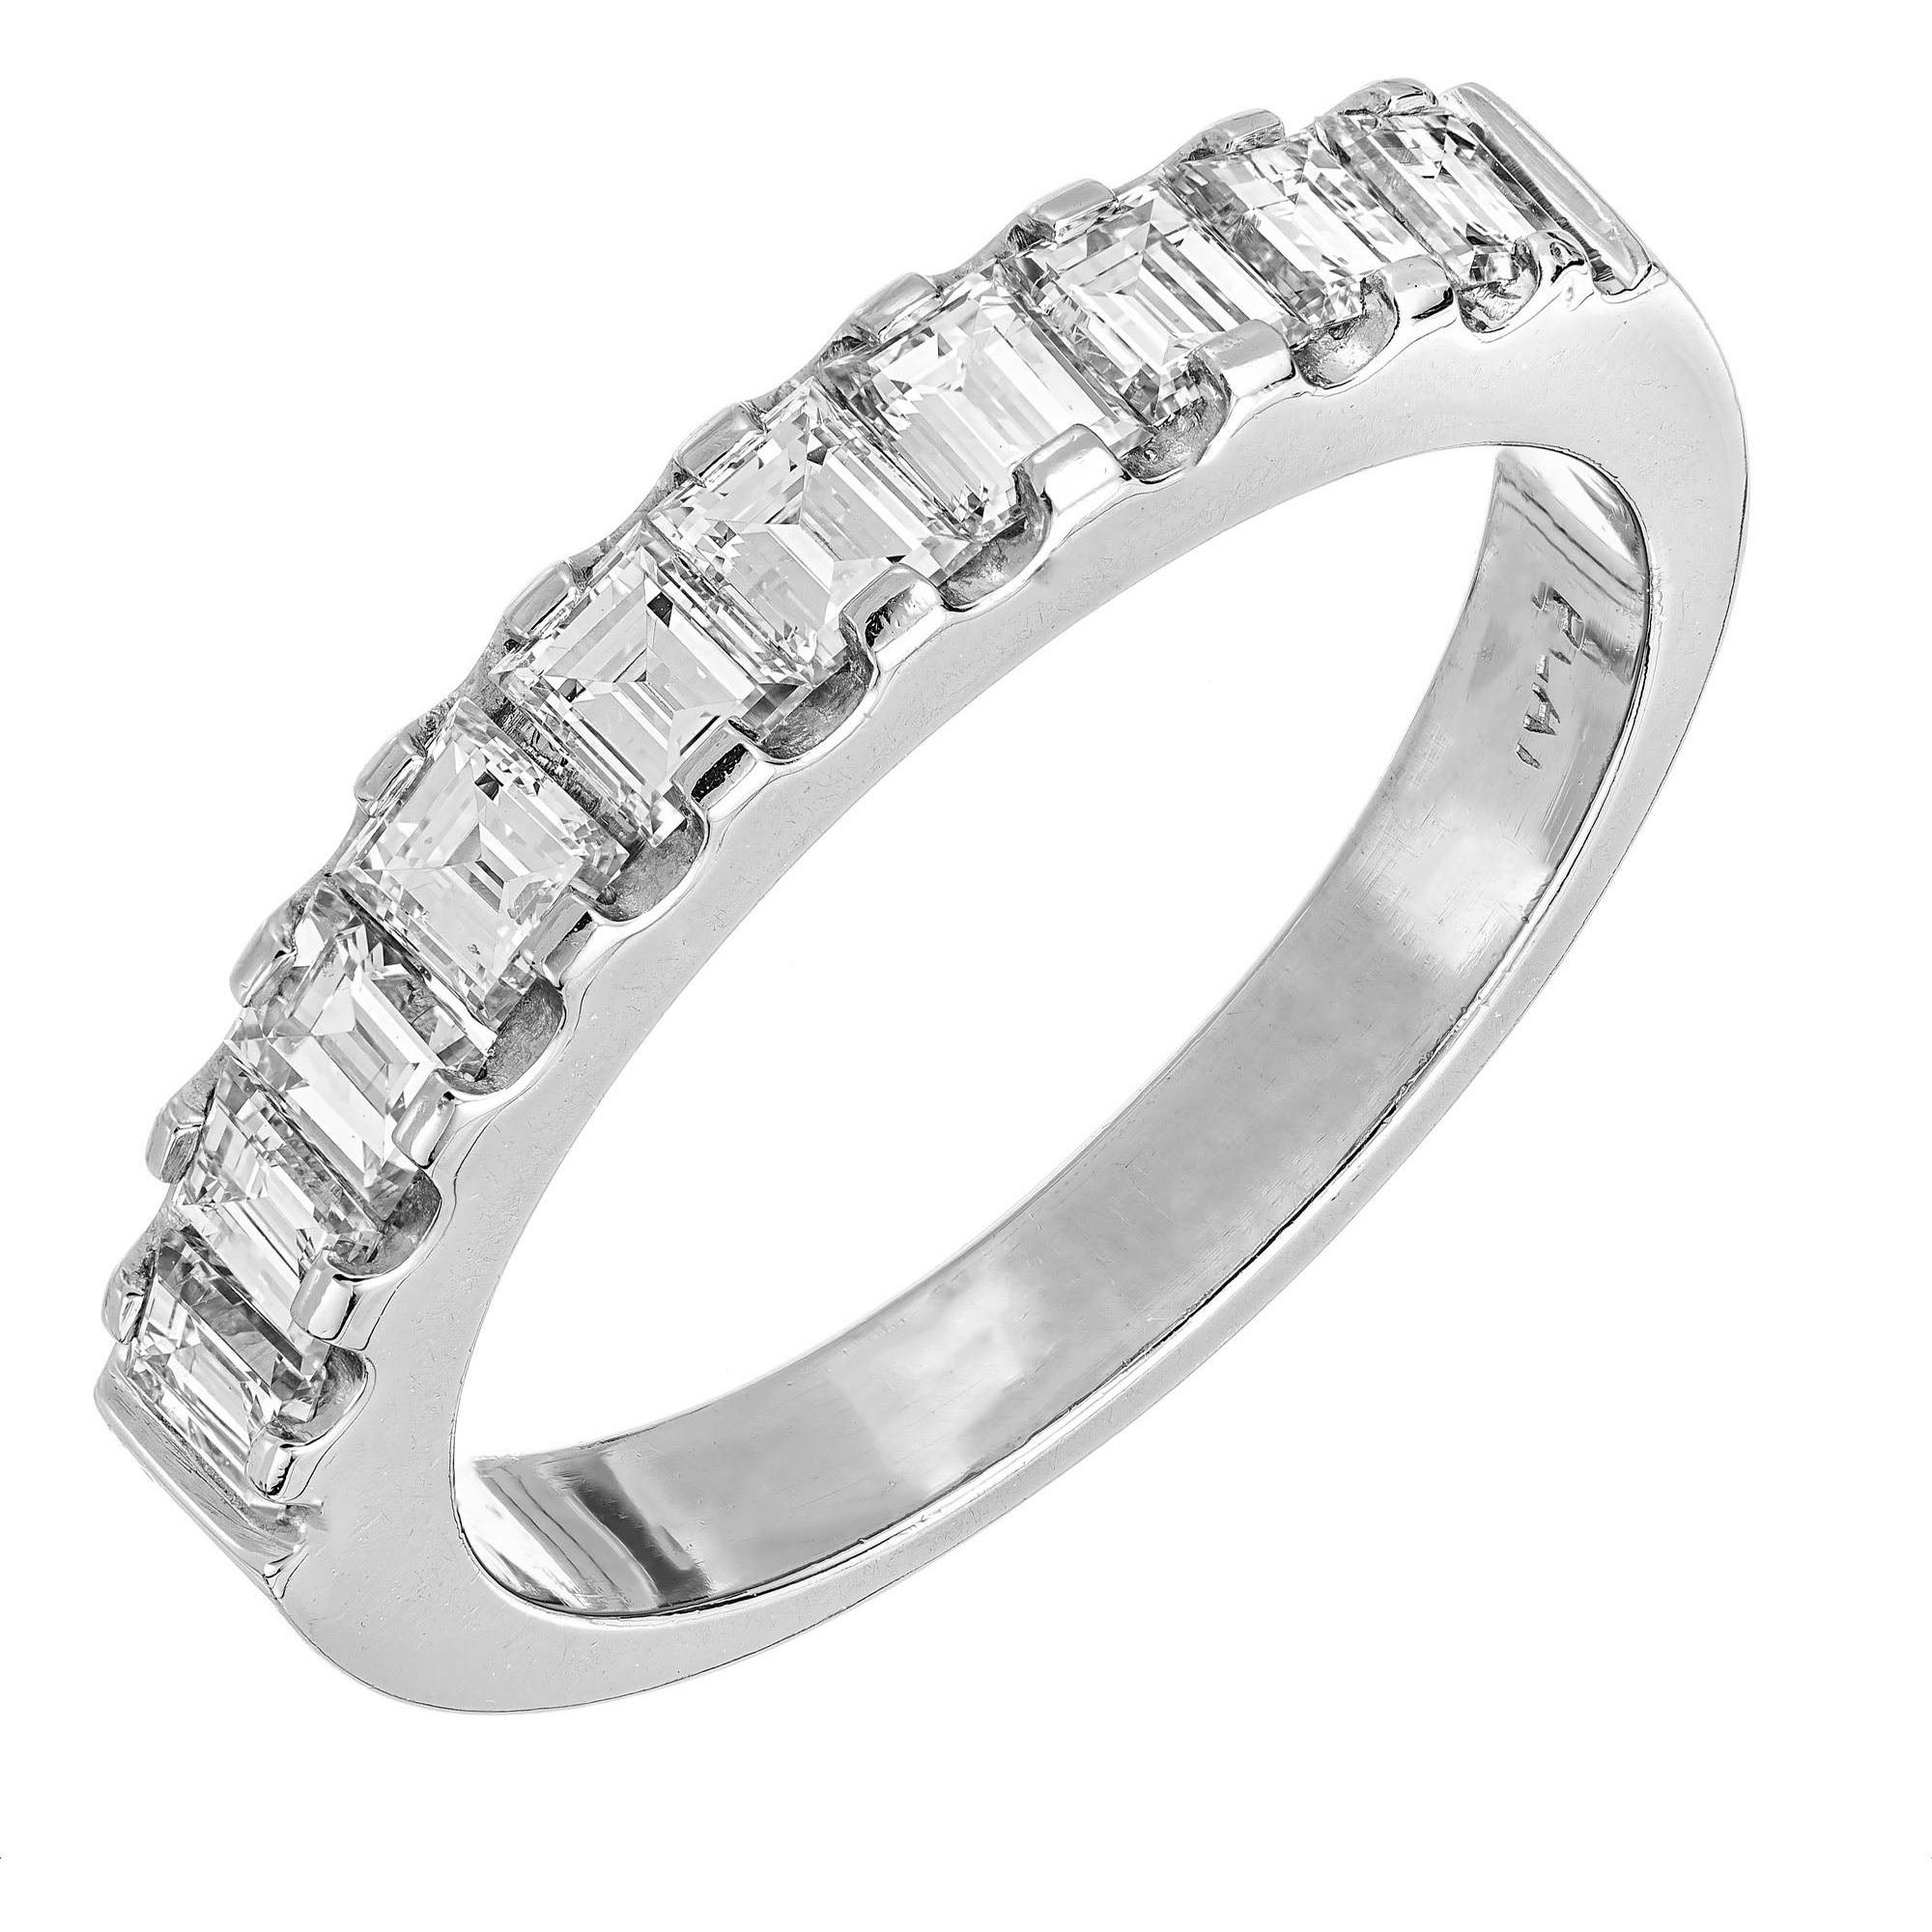 .75 Carat Diamond Platinum Art Deco Style Wedding Band Ring